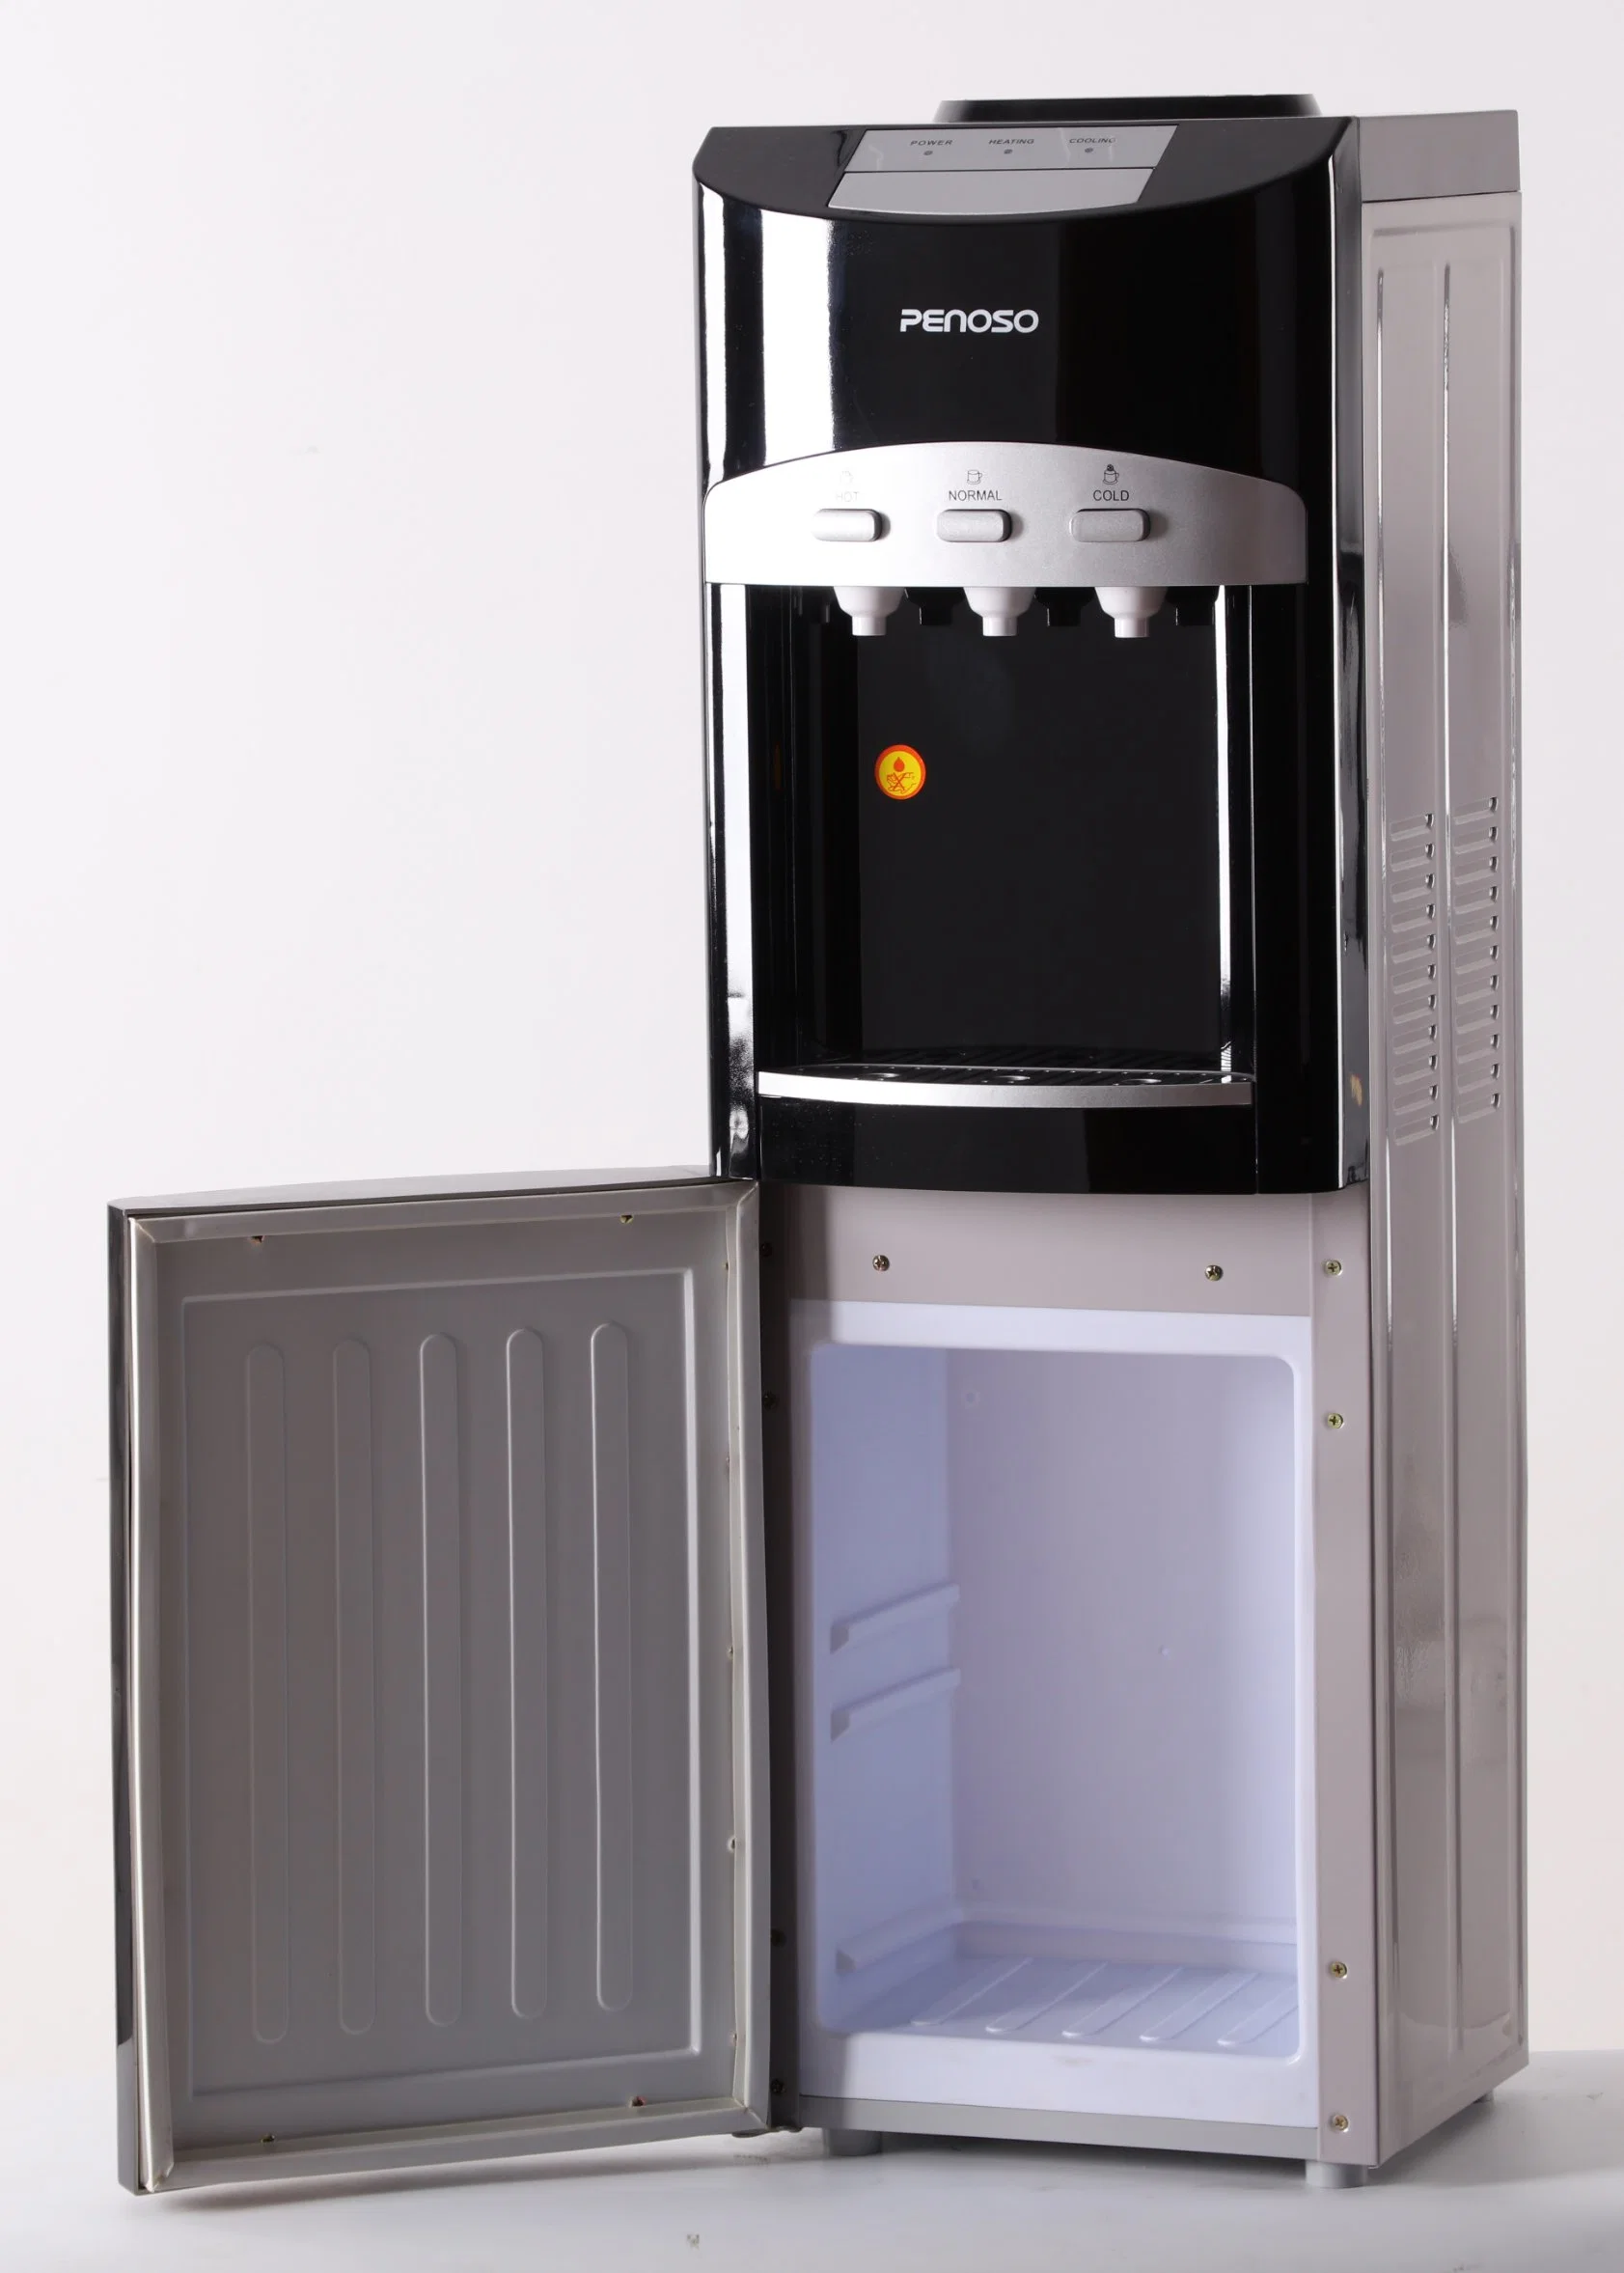 Floor Standing Hot and Cold Water Dispenser / Vertical Water Dispenser / Filter / Chiller / Water Filter / Water Purifier / Water Cooler / Freezer